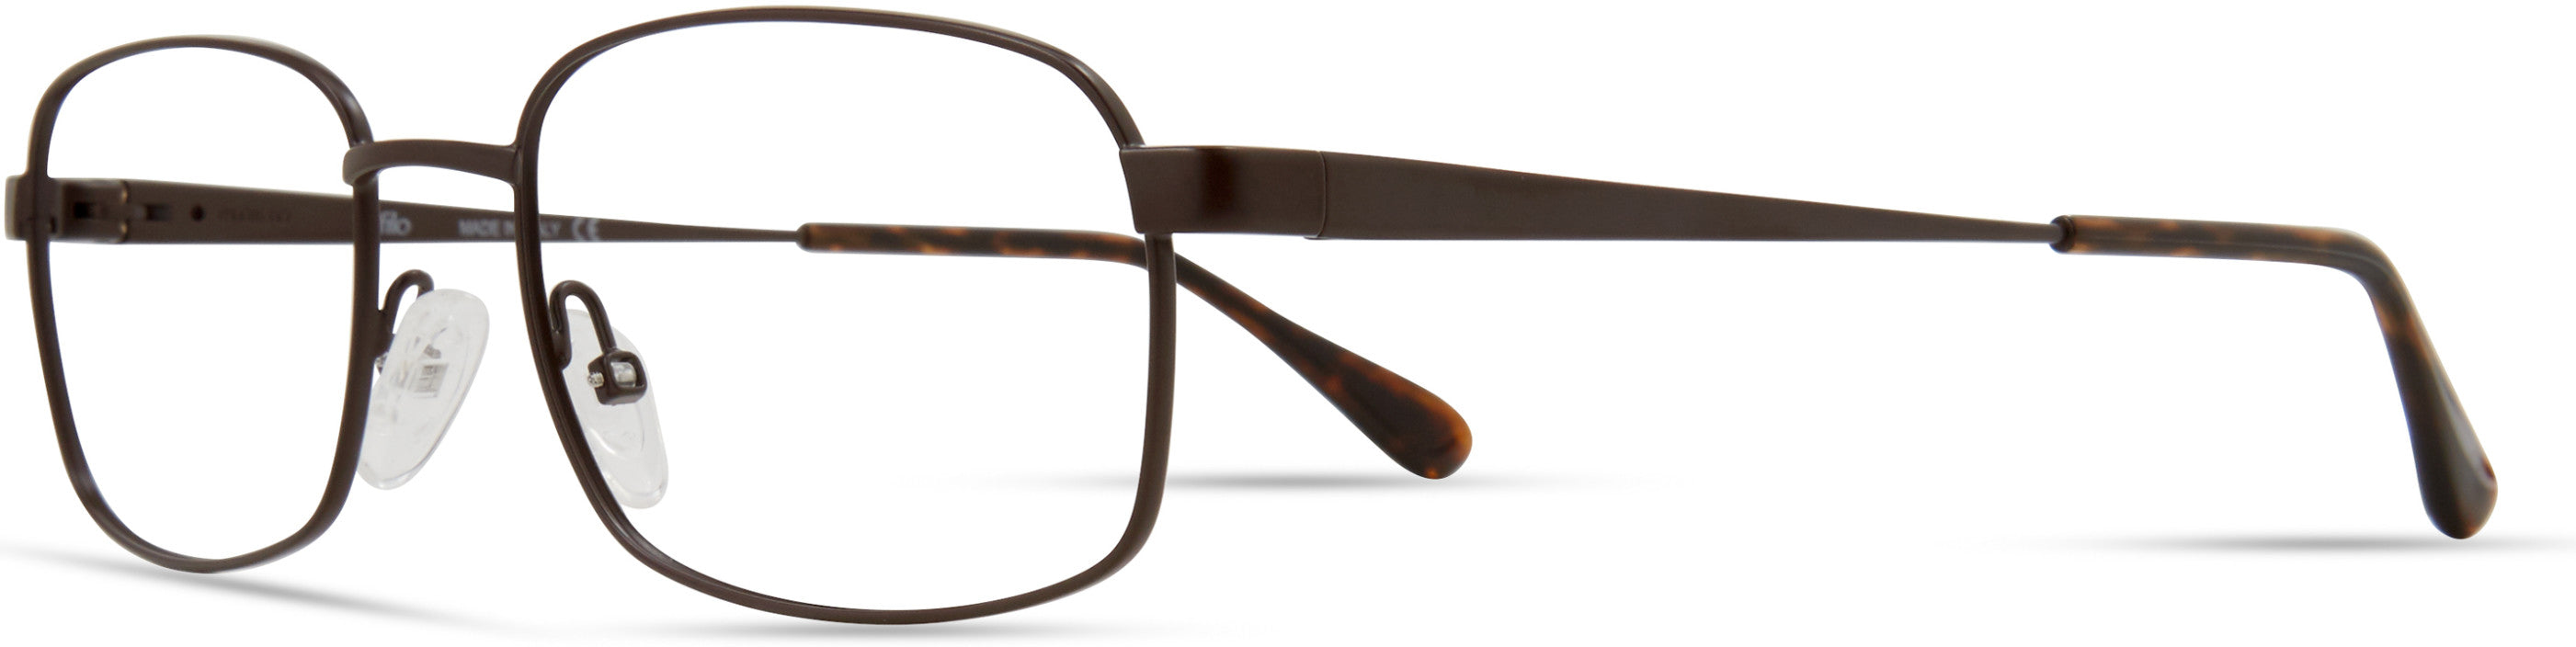  Elasta 7229 Rectangular Eyeglasses 04IN-04IN  Matte Brown (00 Demo Lens)